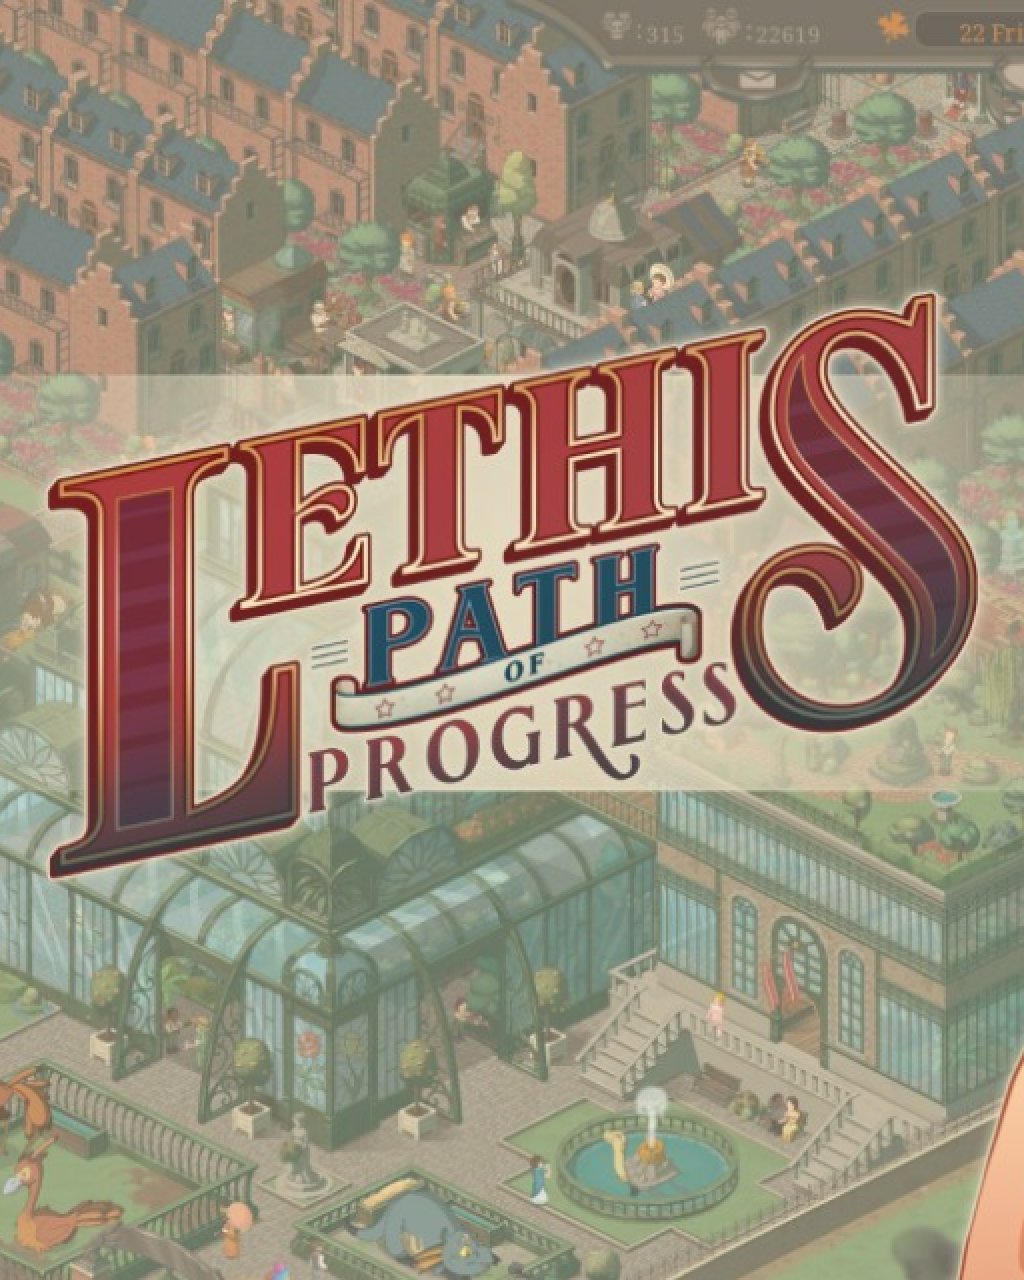 Lethis Path of Progress